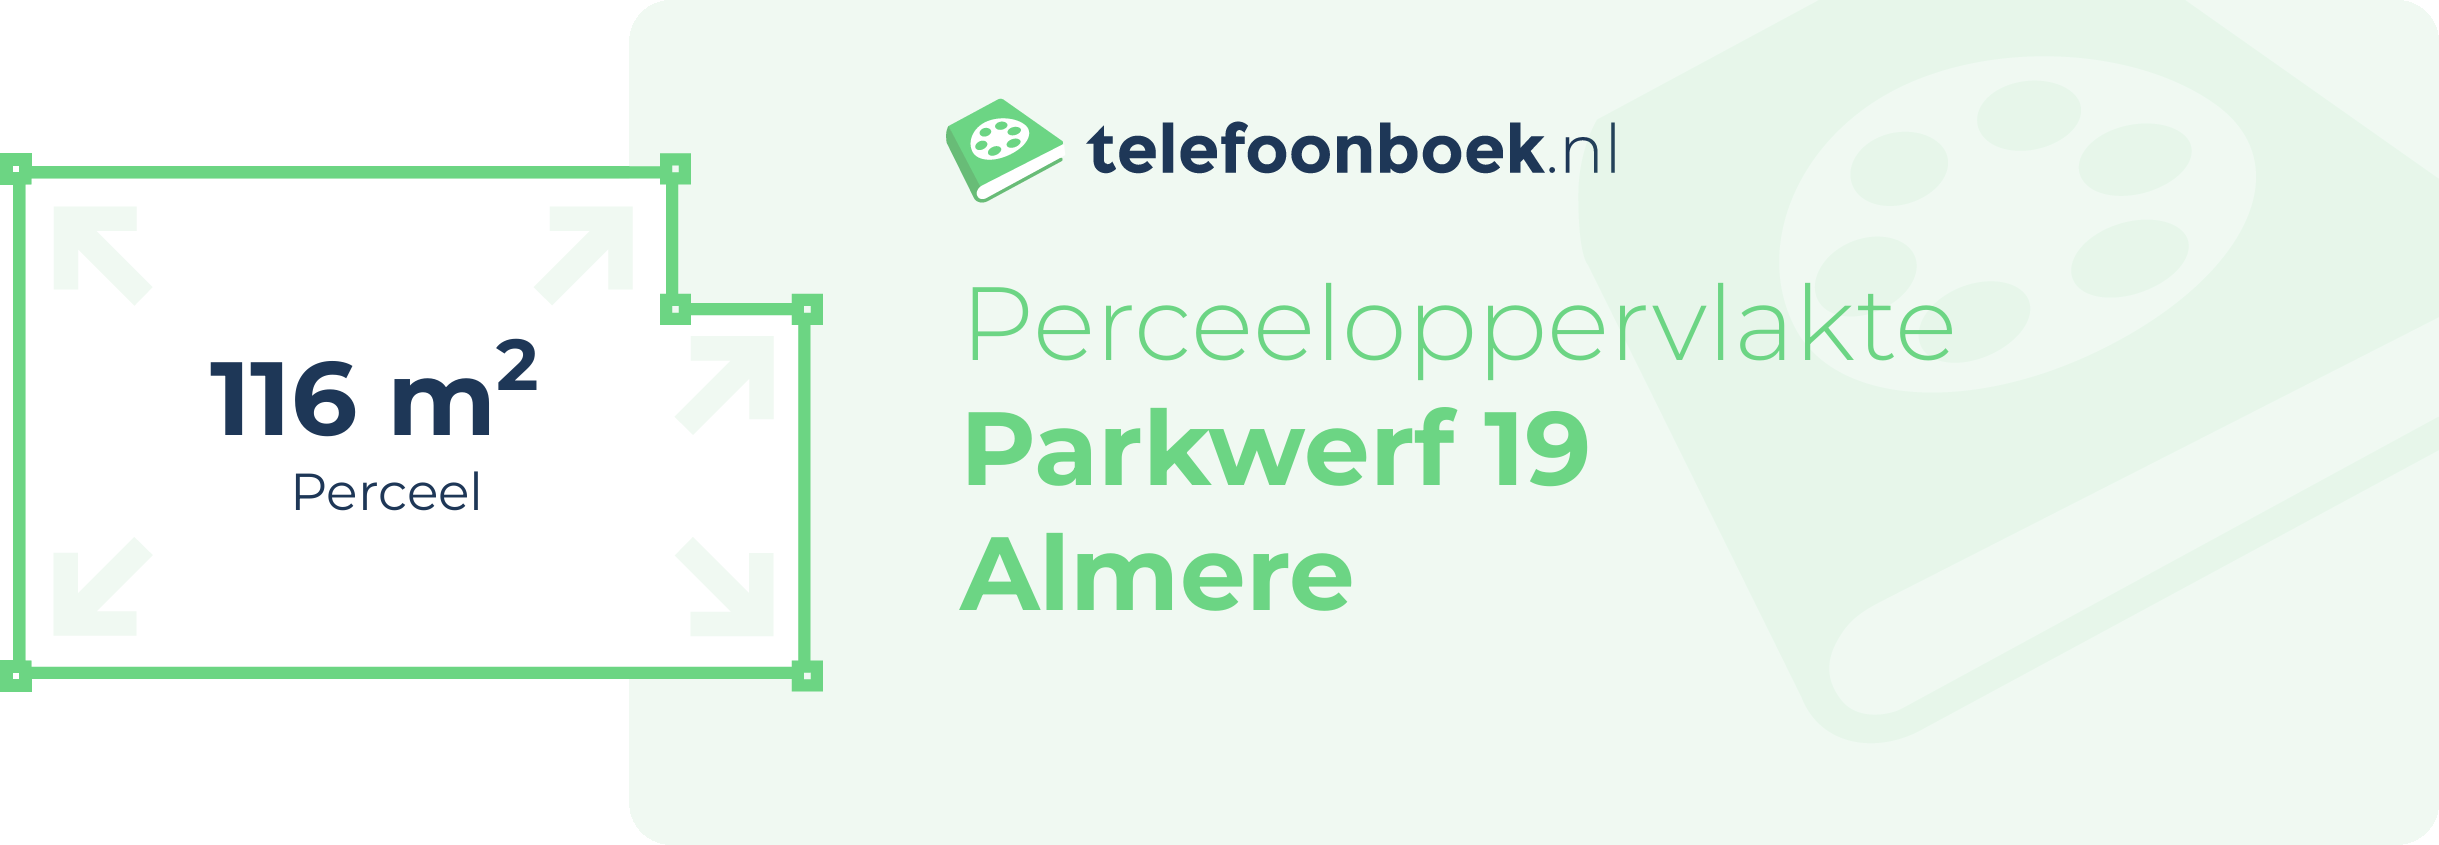 Perceeloppervlakte Parkwerf 19 Almere